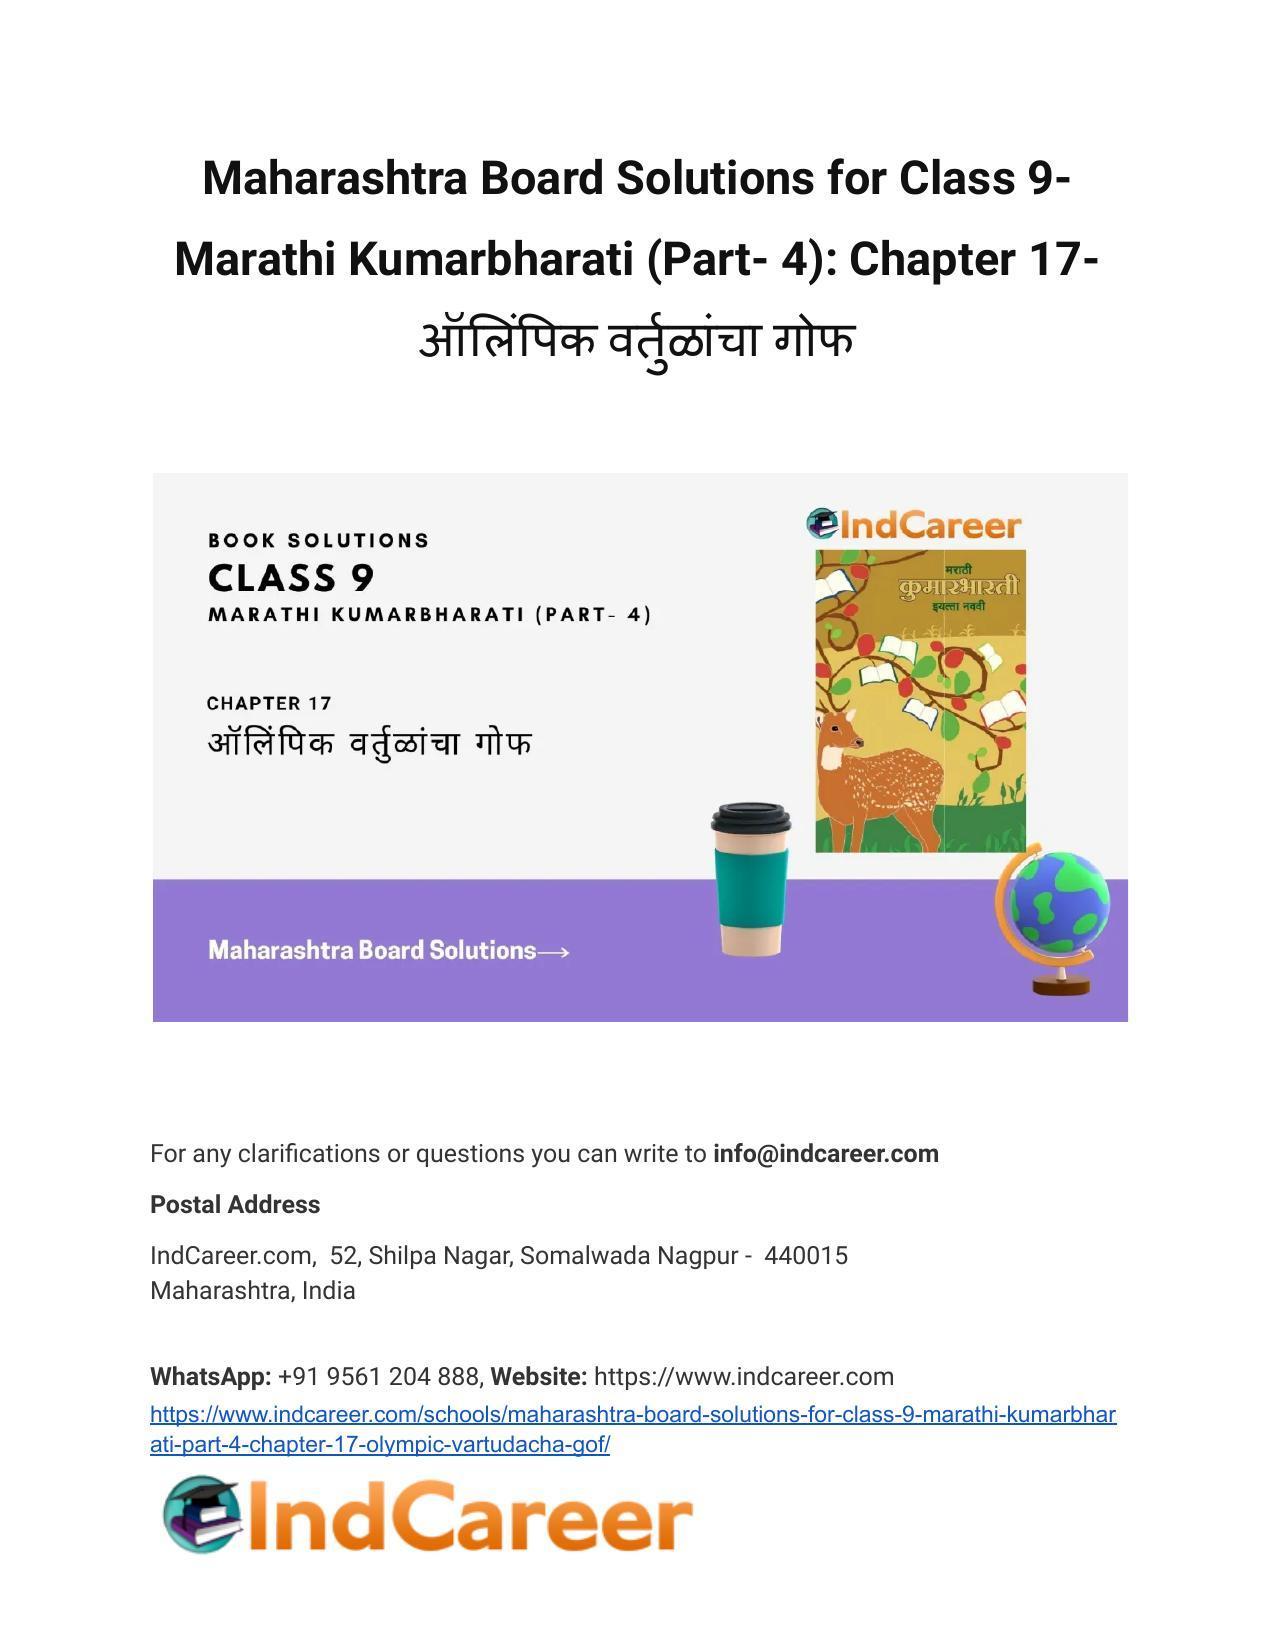 Maharashtra Board Solutions for Class 9- Marathi Kumarbharati (Part- 4): Chapter 17- ऑलिंपिक वर्तुळांचा गोफ - Page 1